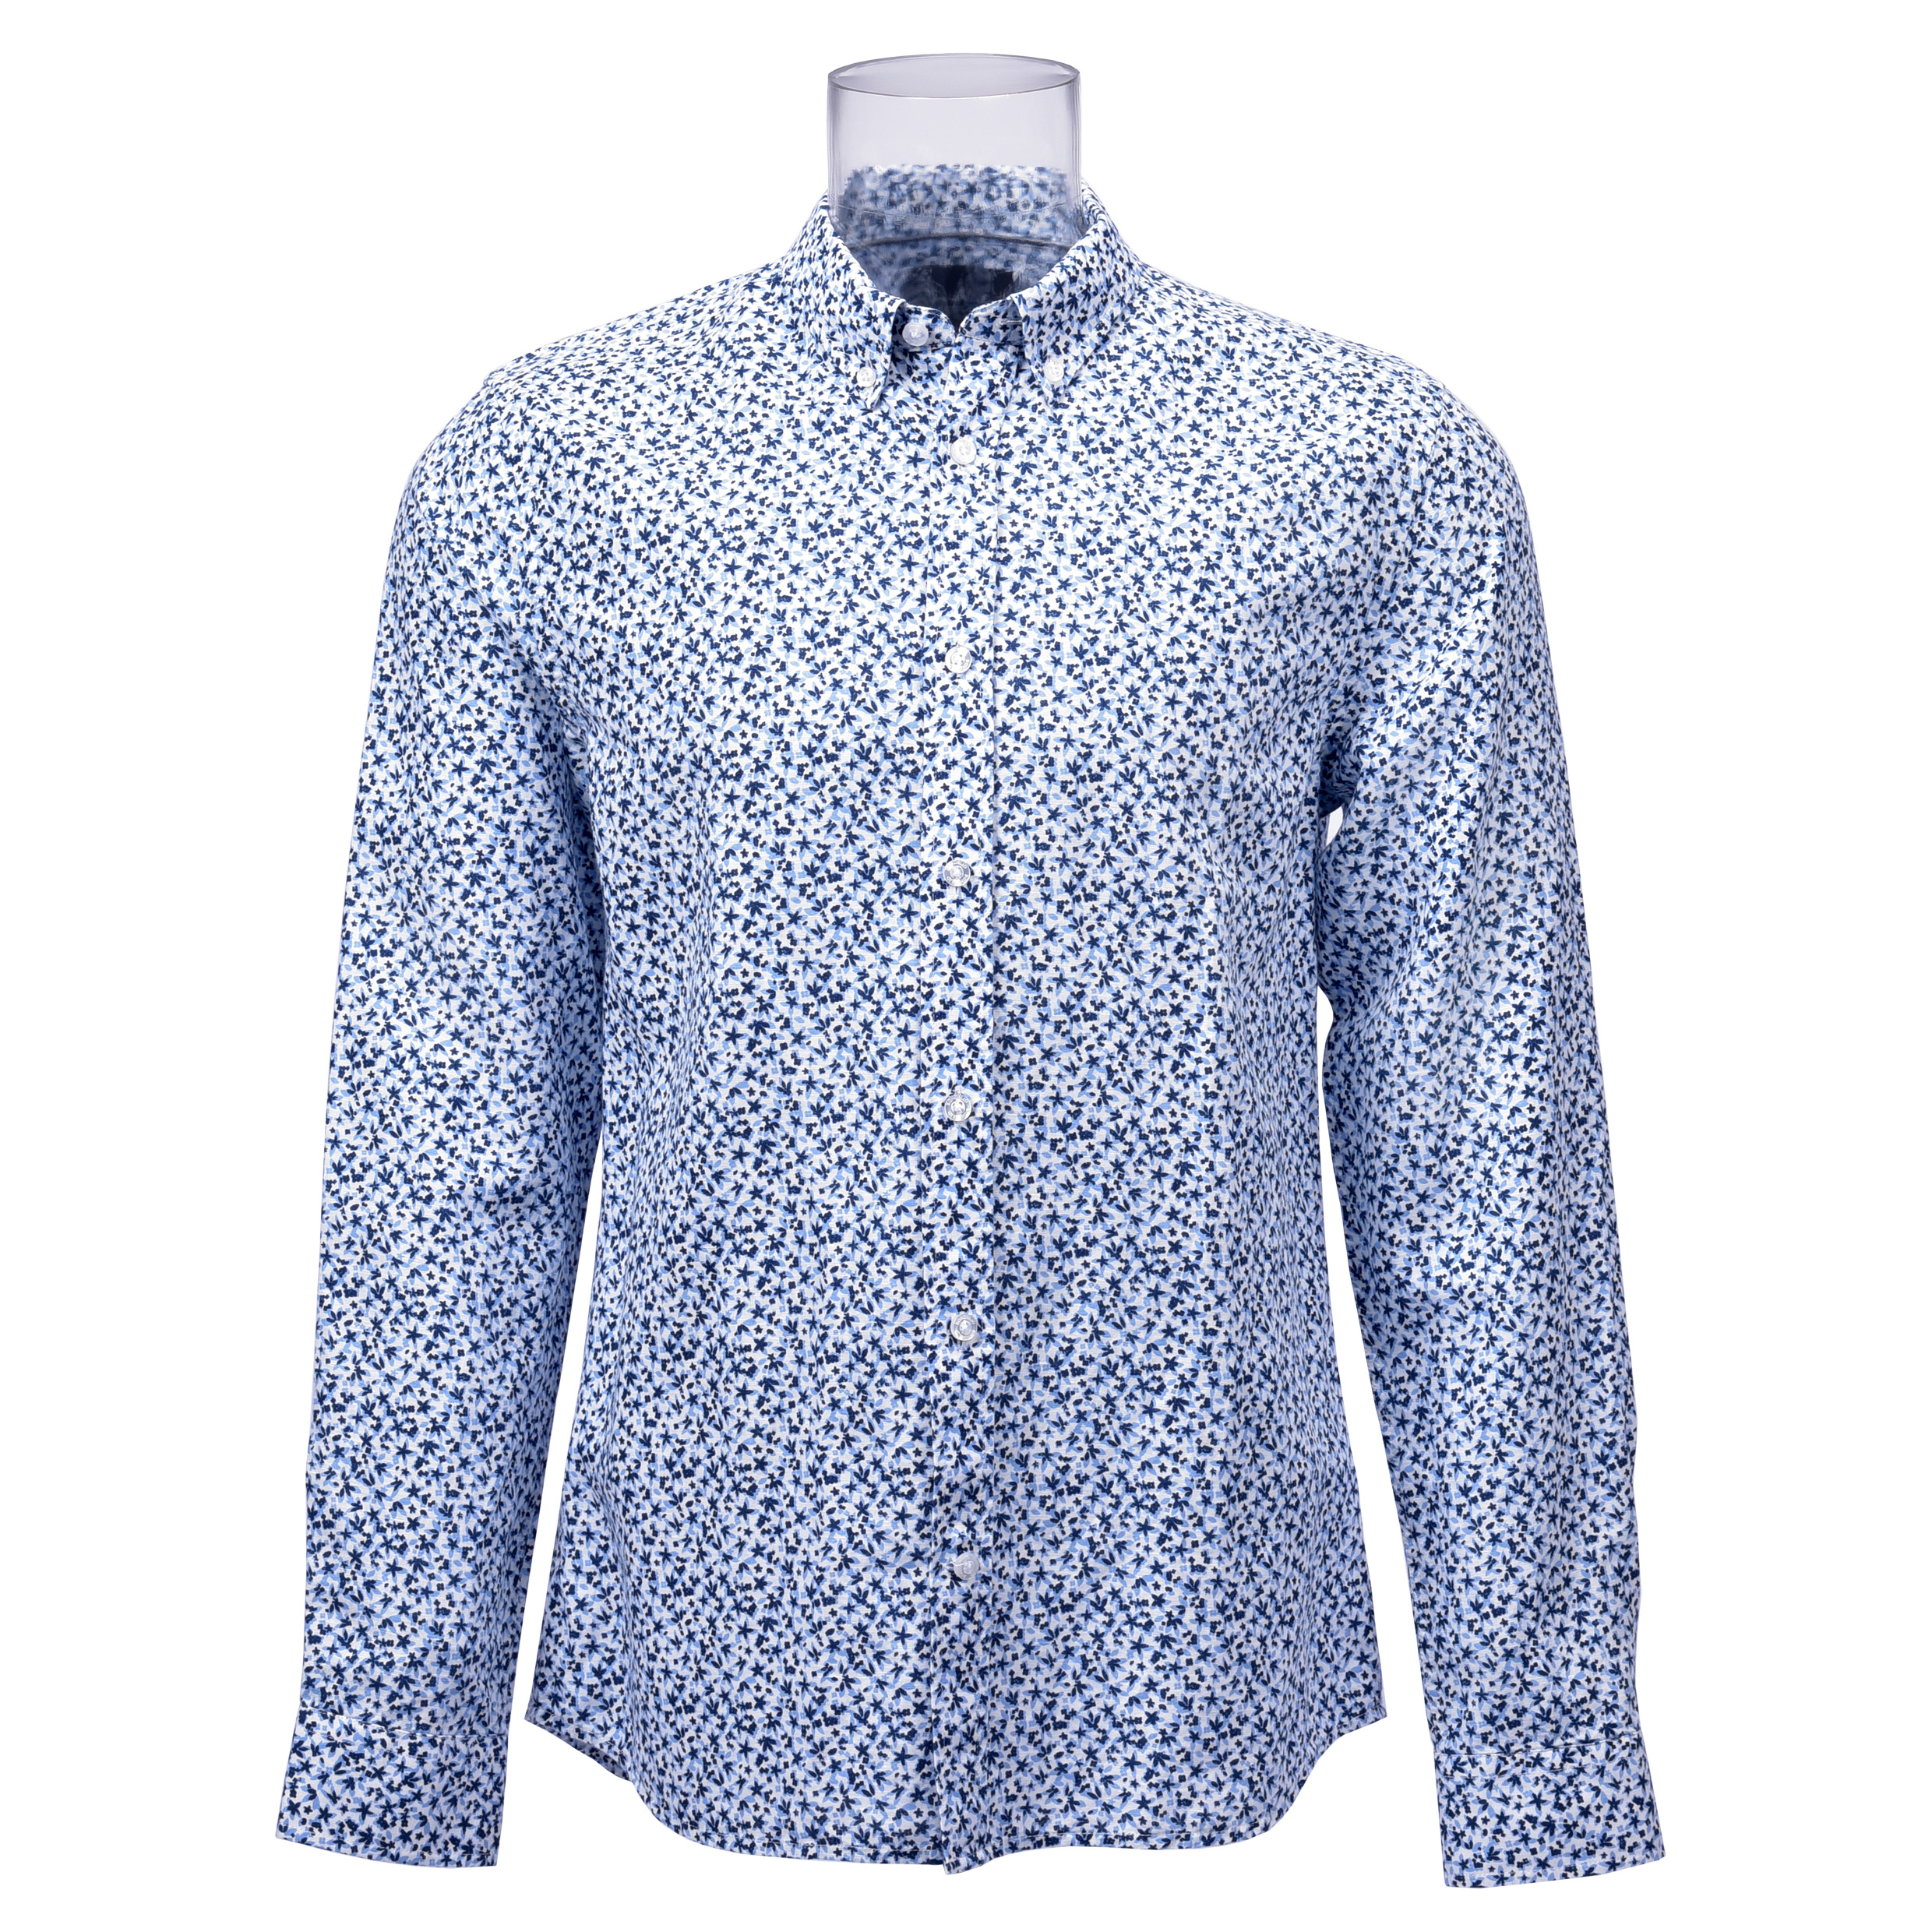 Men’s Shirt Cotton Linen Blended Long Sleeve Blue Floral Printed Shirt For Men GTCW107328G1